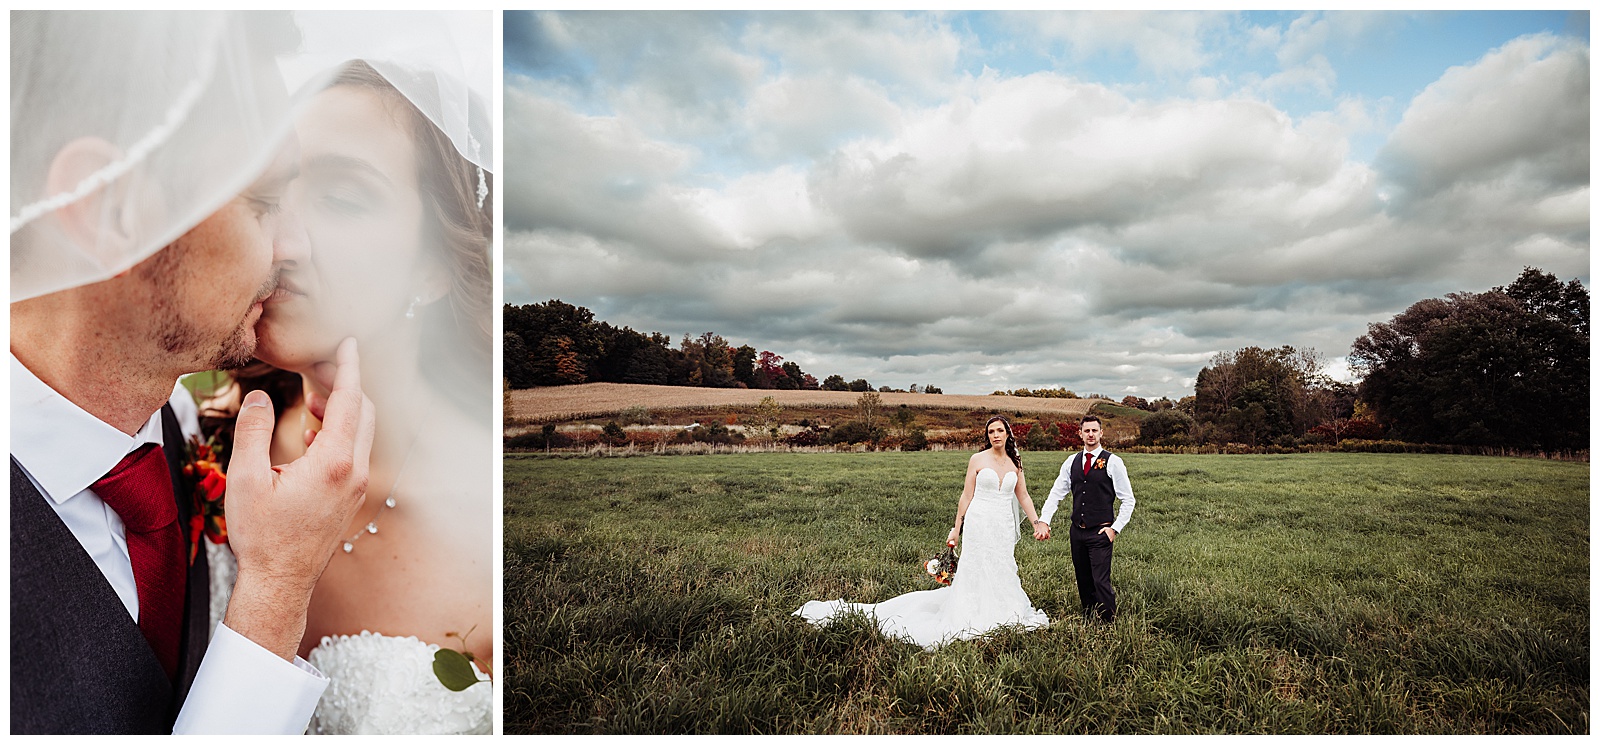 Fall Bride + Groom Portraits in Chautauqua County NY